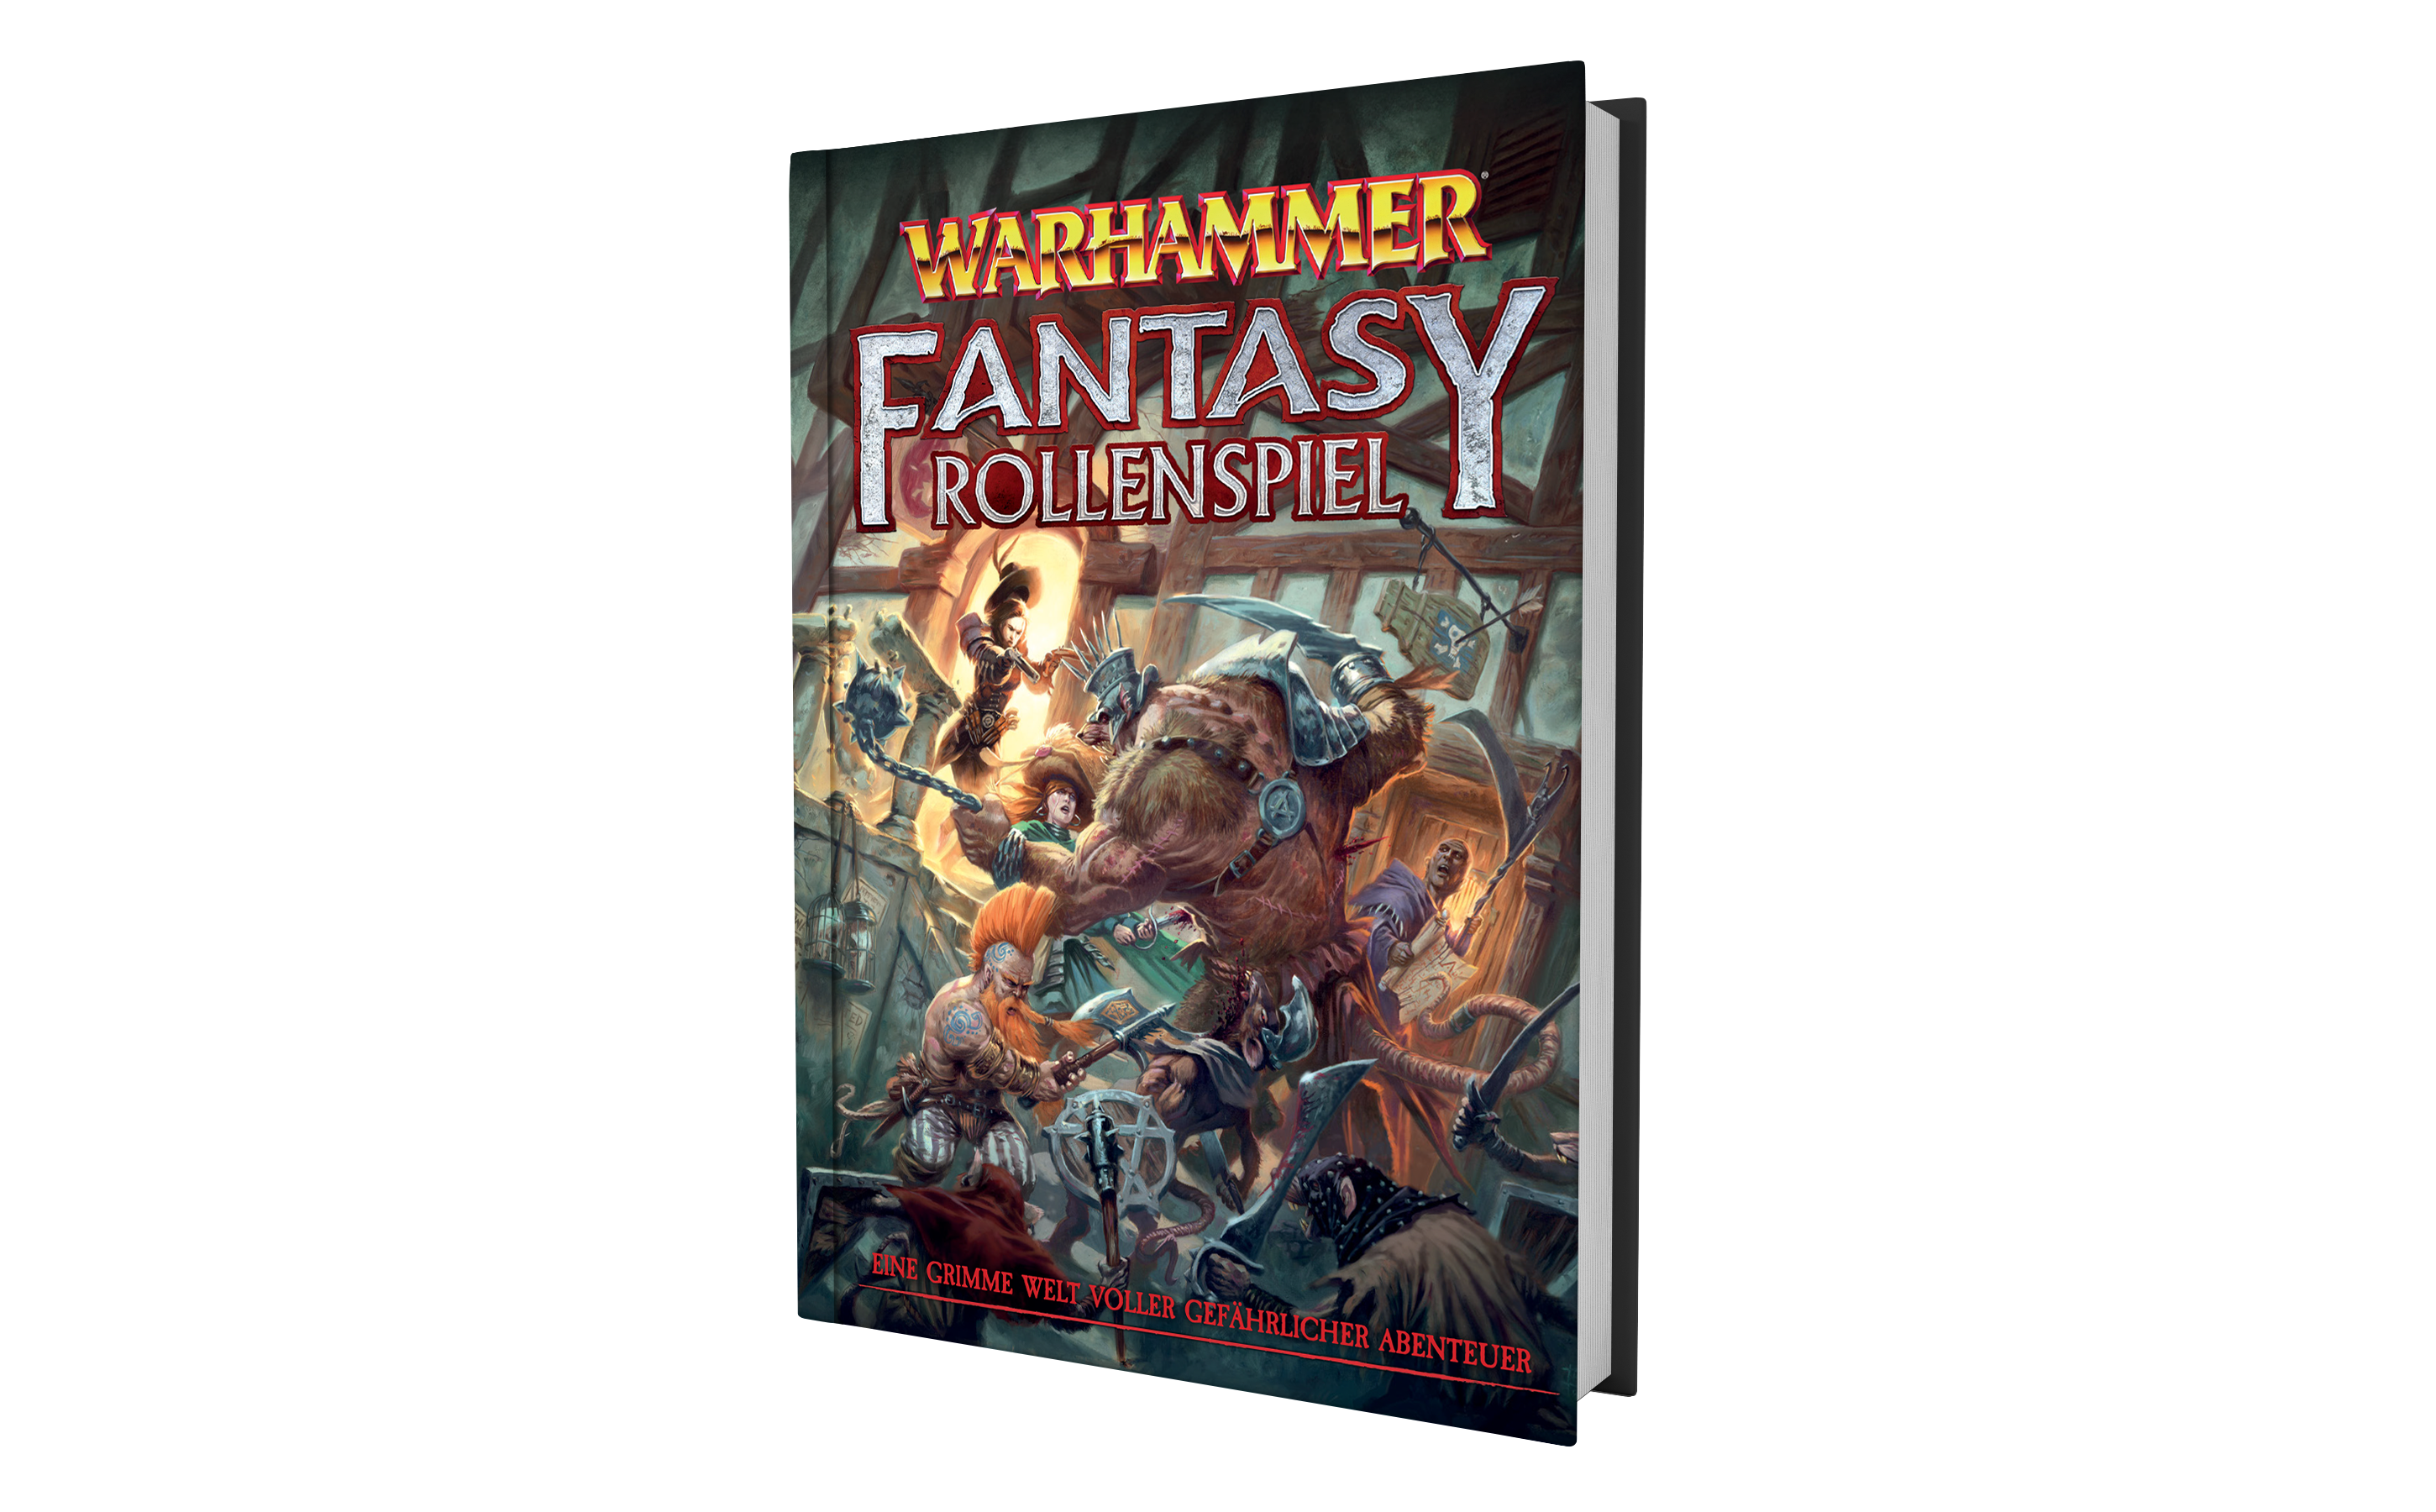 Warhammer Fantasy – Rollenspiel Regelwerk – Ladenprevi